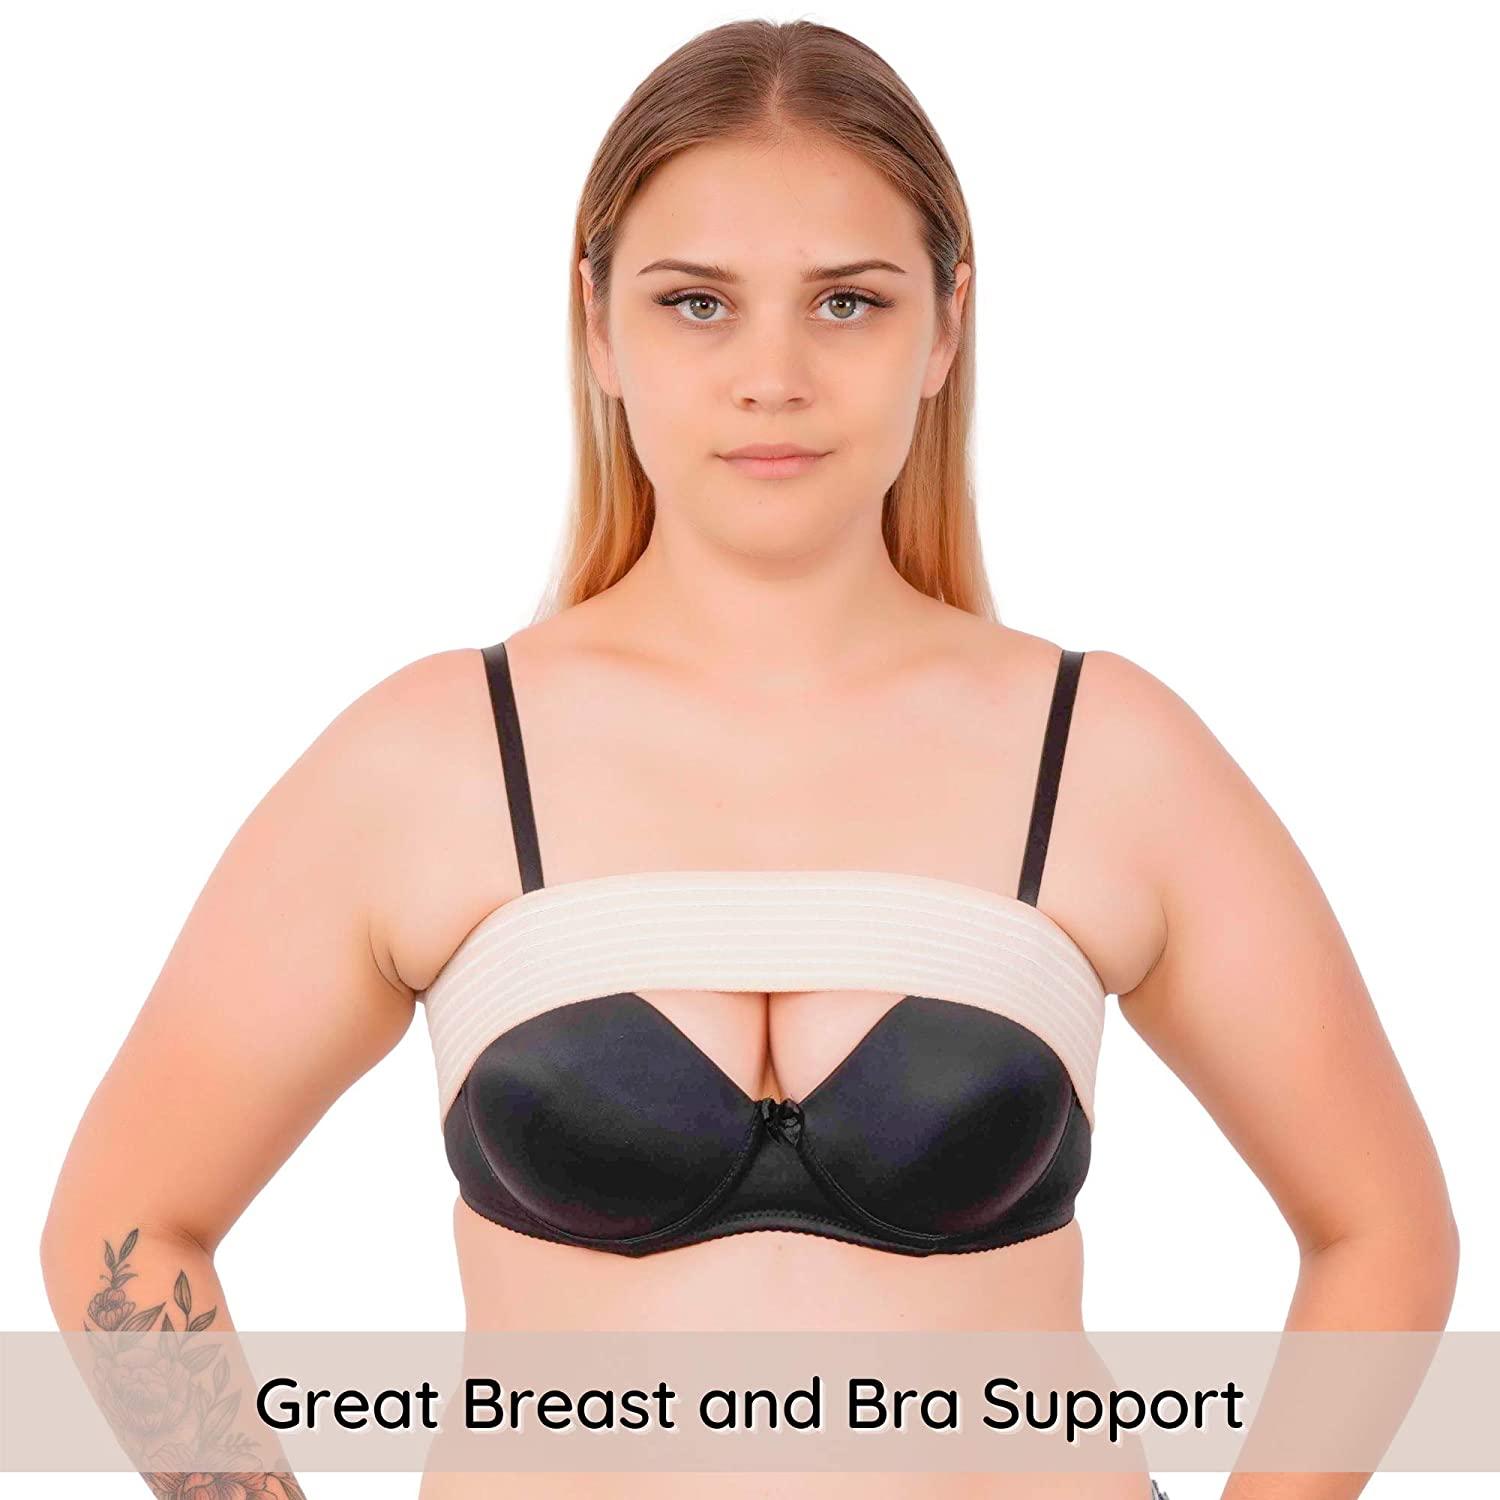 Post-op bra after breast enlargement or reduction + Elastic stabilizer